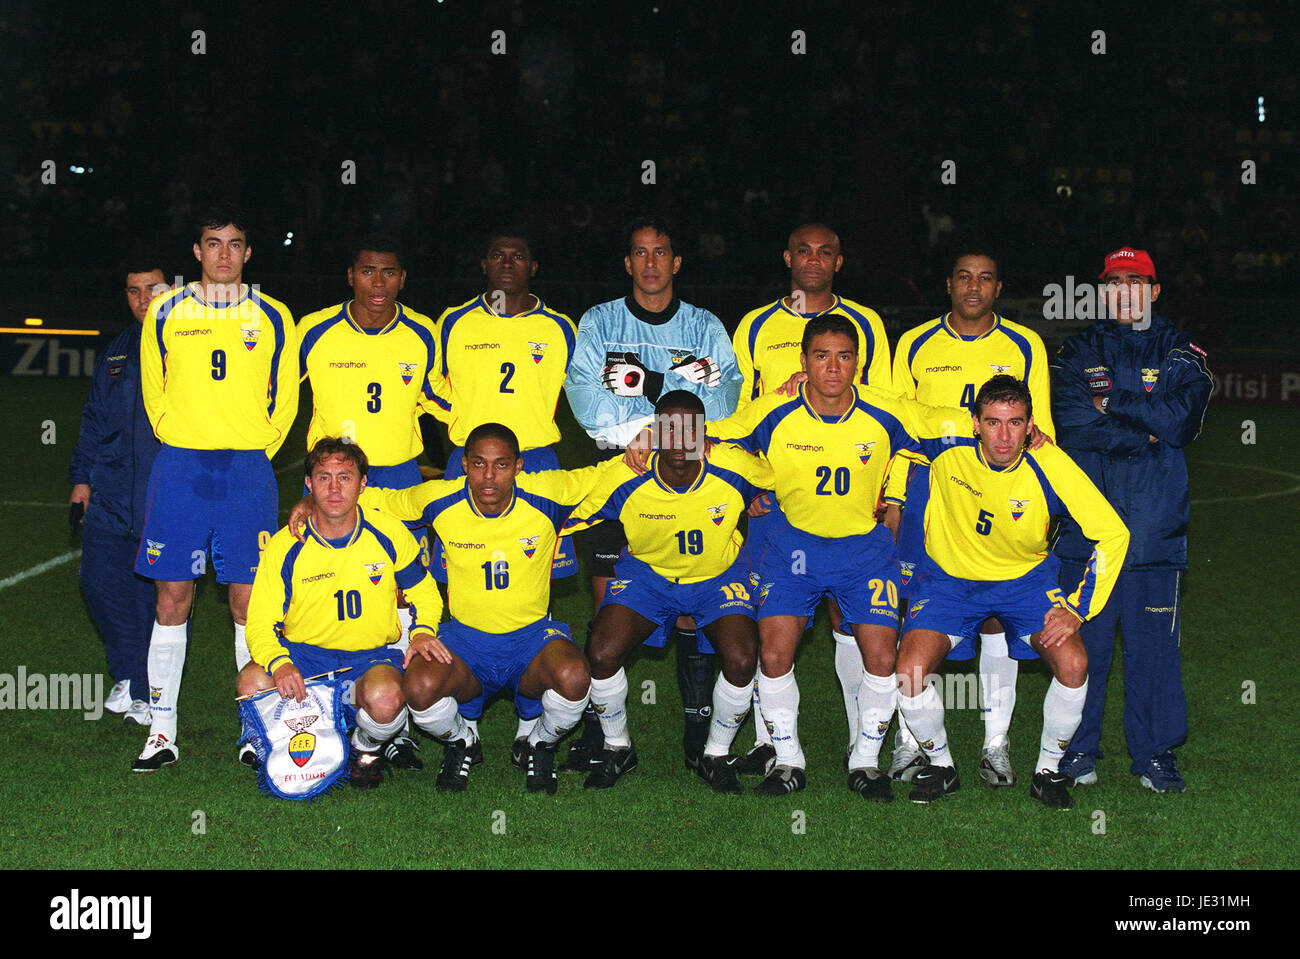 Wooden Ecuador National Team Crest Futbol Soccer Football 